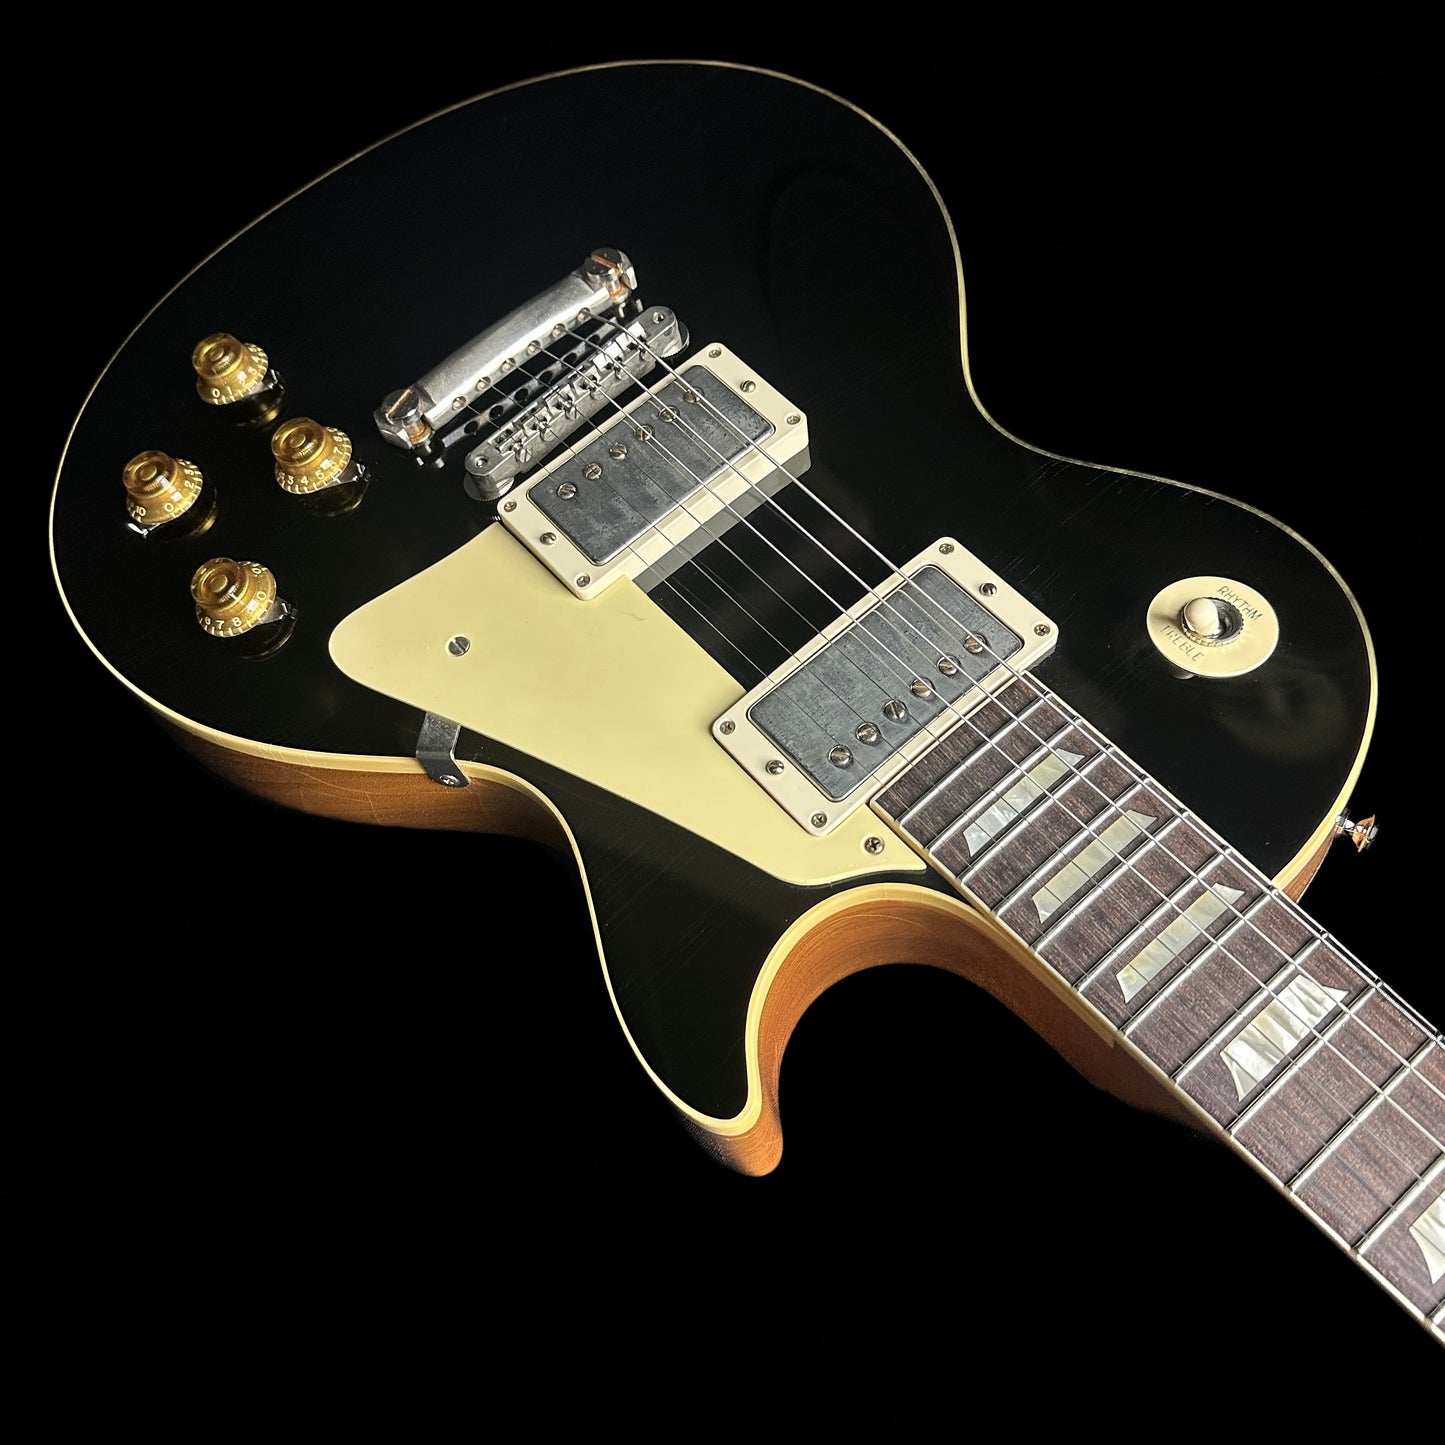 Gibson Custom Shop M2M 1958 Les Paul Standard Chambered Ebony Murphy Lab Ultra Light Aged w/case